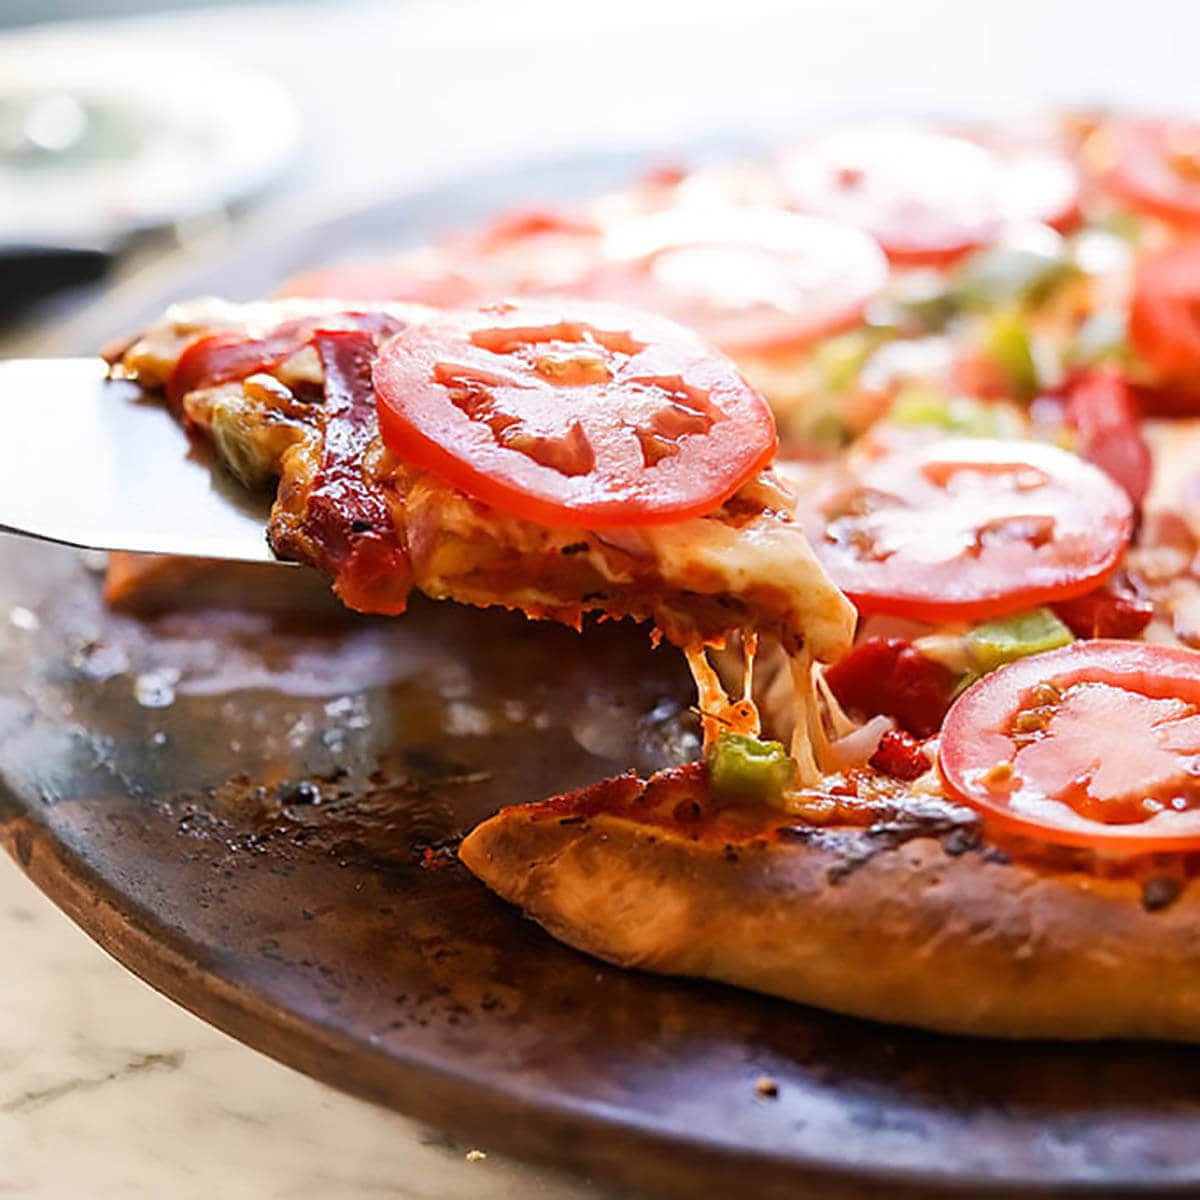 https://bowl-me-over.com/wp-content/uploads/2019/08/Quick-Homemade-Pizza-1.jpg